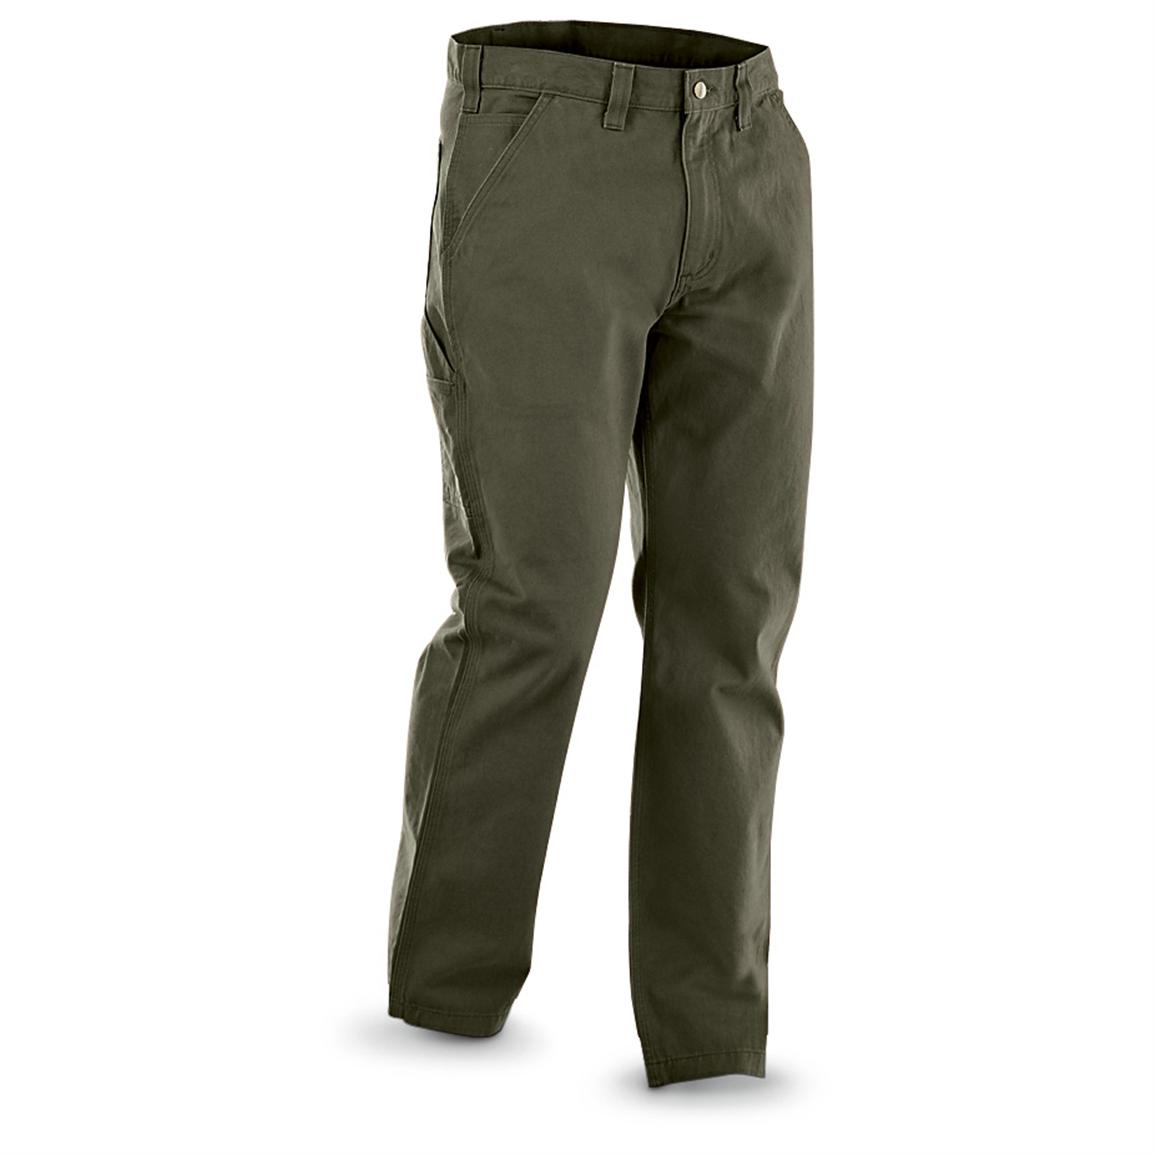 Carhartt Men's Twill Carpenter Pants - 283175, Jeans & Pants at ...